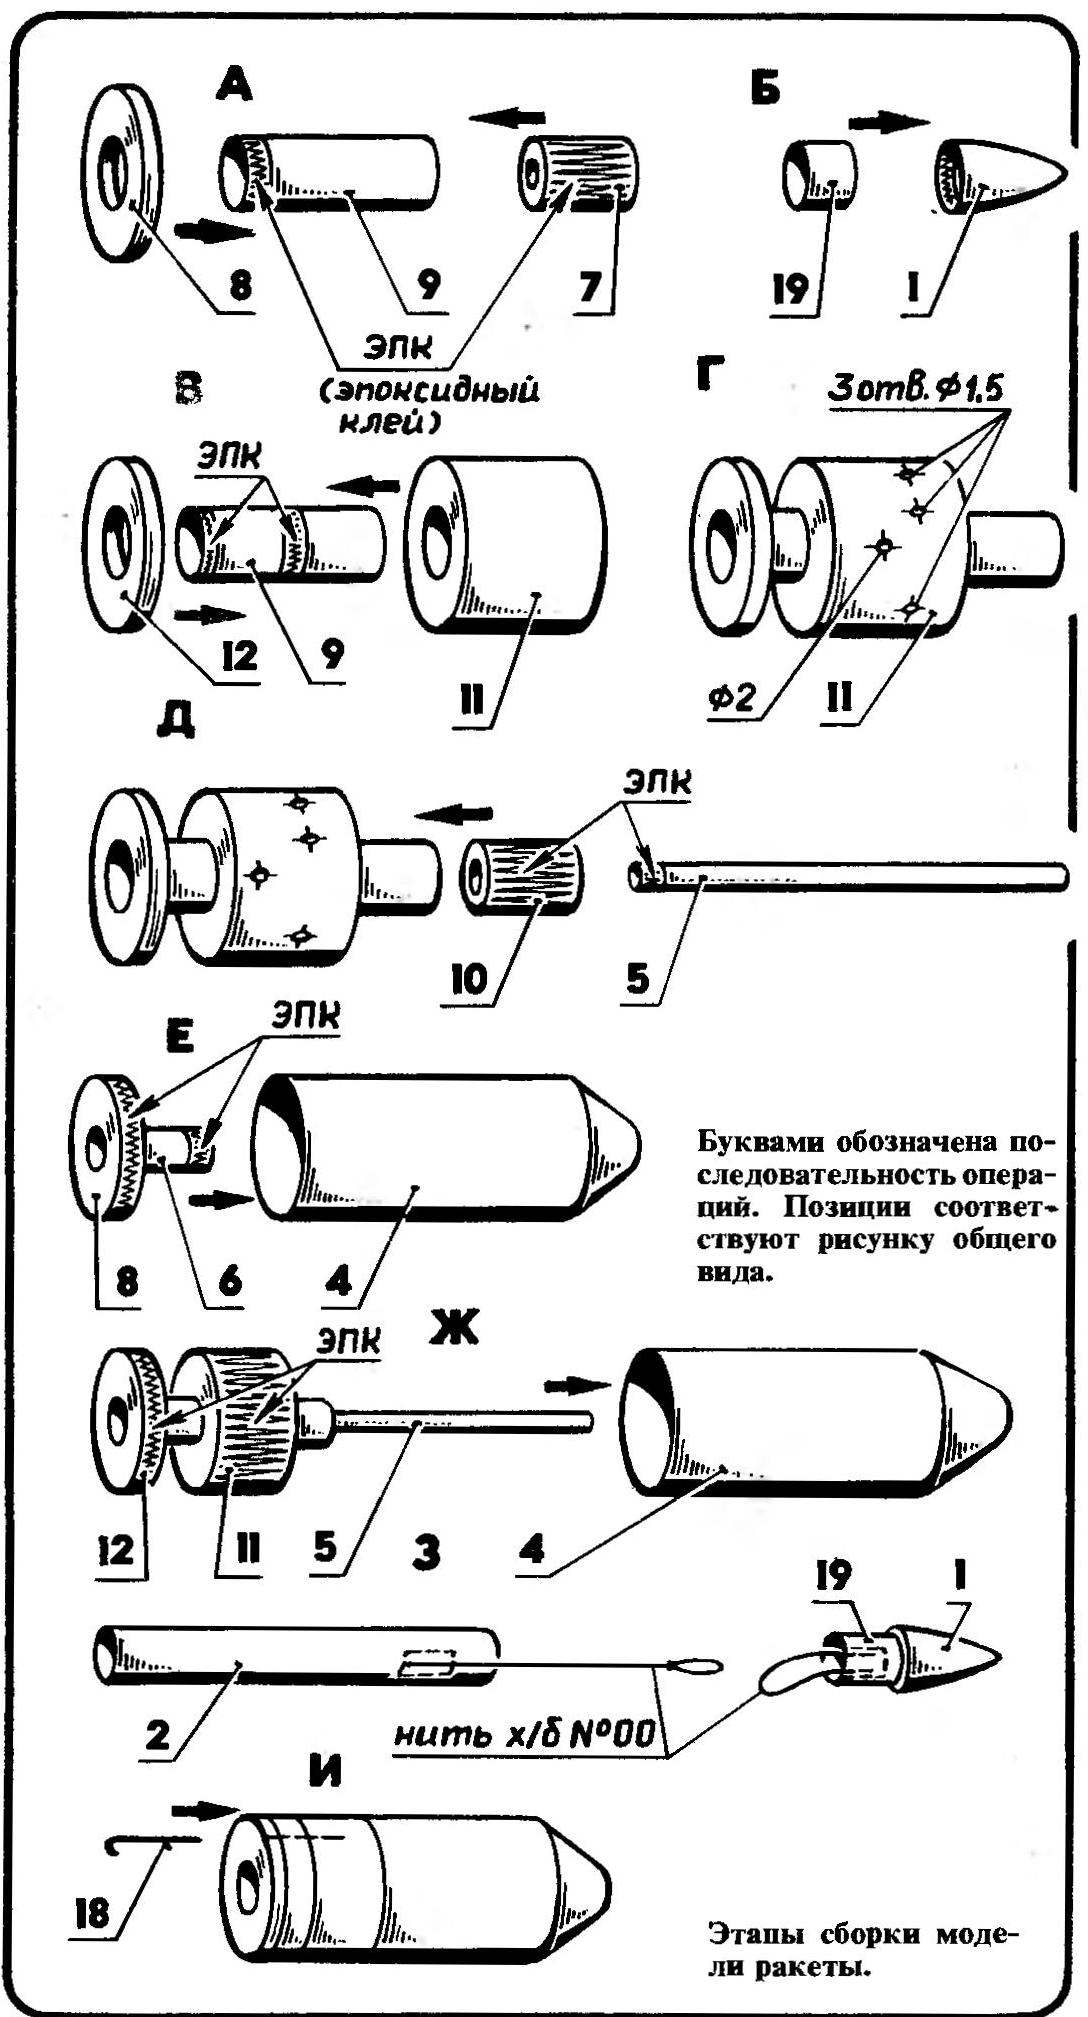 Stages of building a rocket model